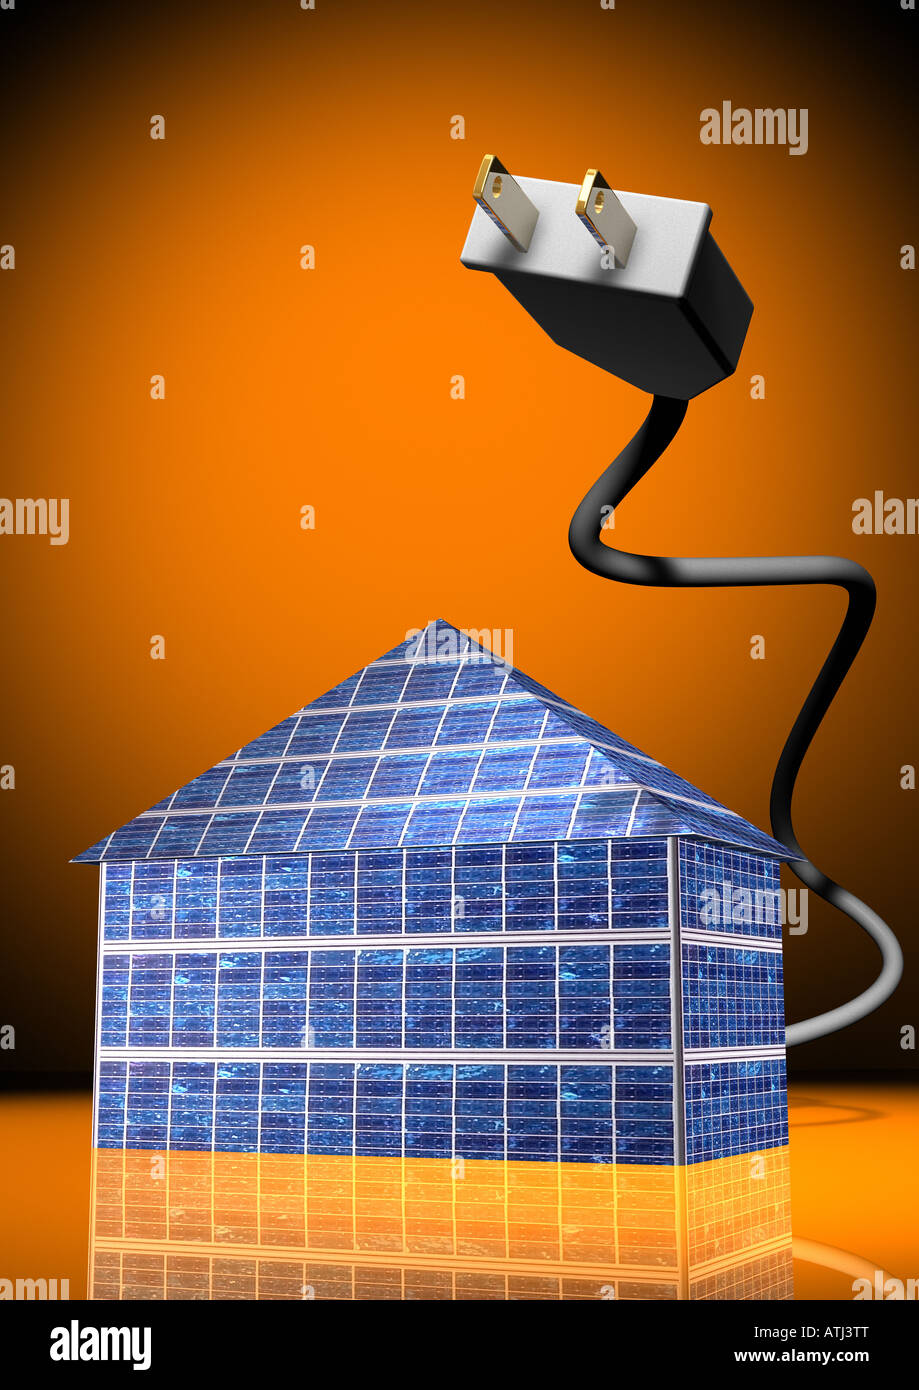 solar energy house Solarstrom Solarhaus Stock Photo